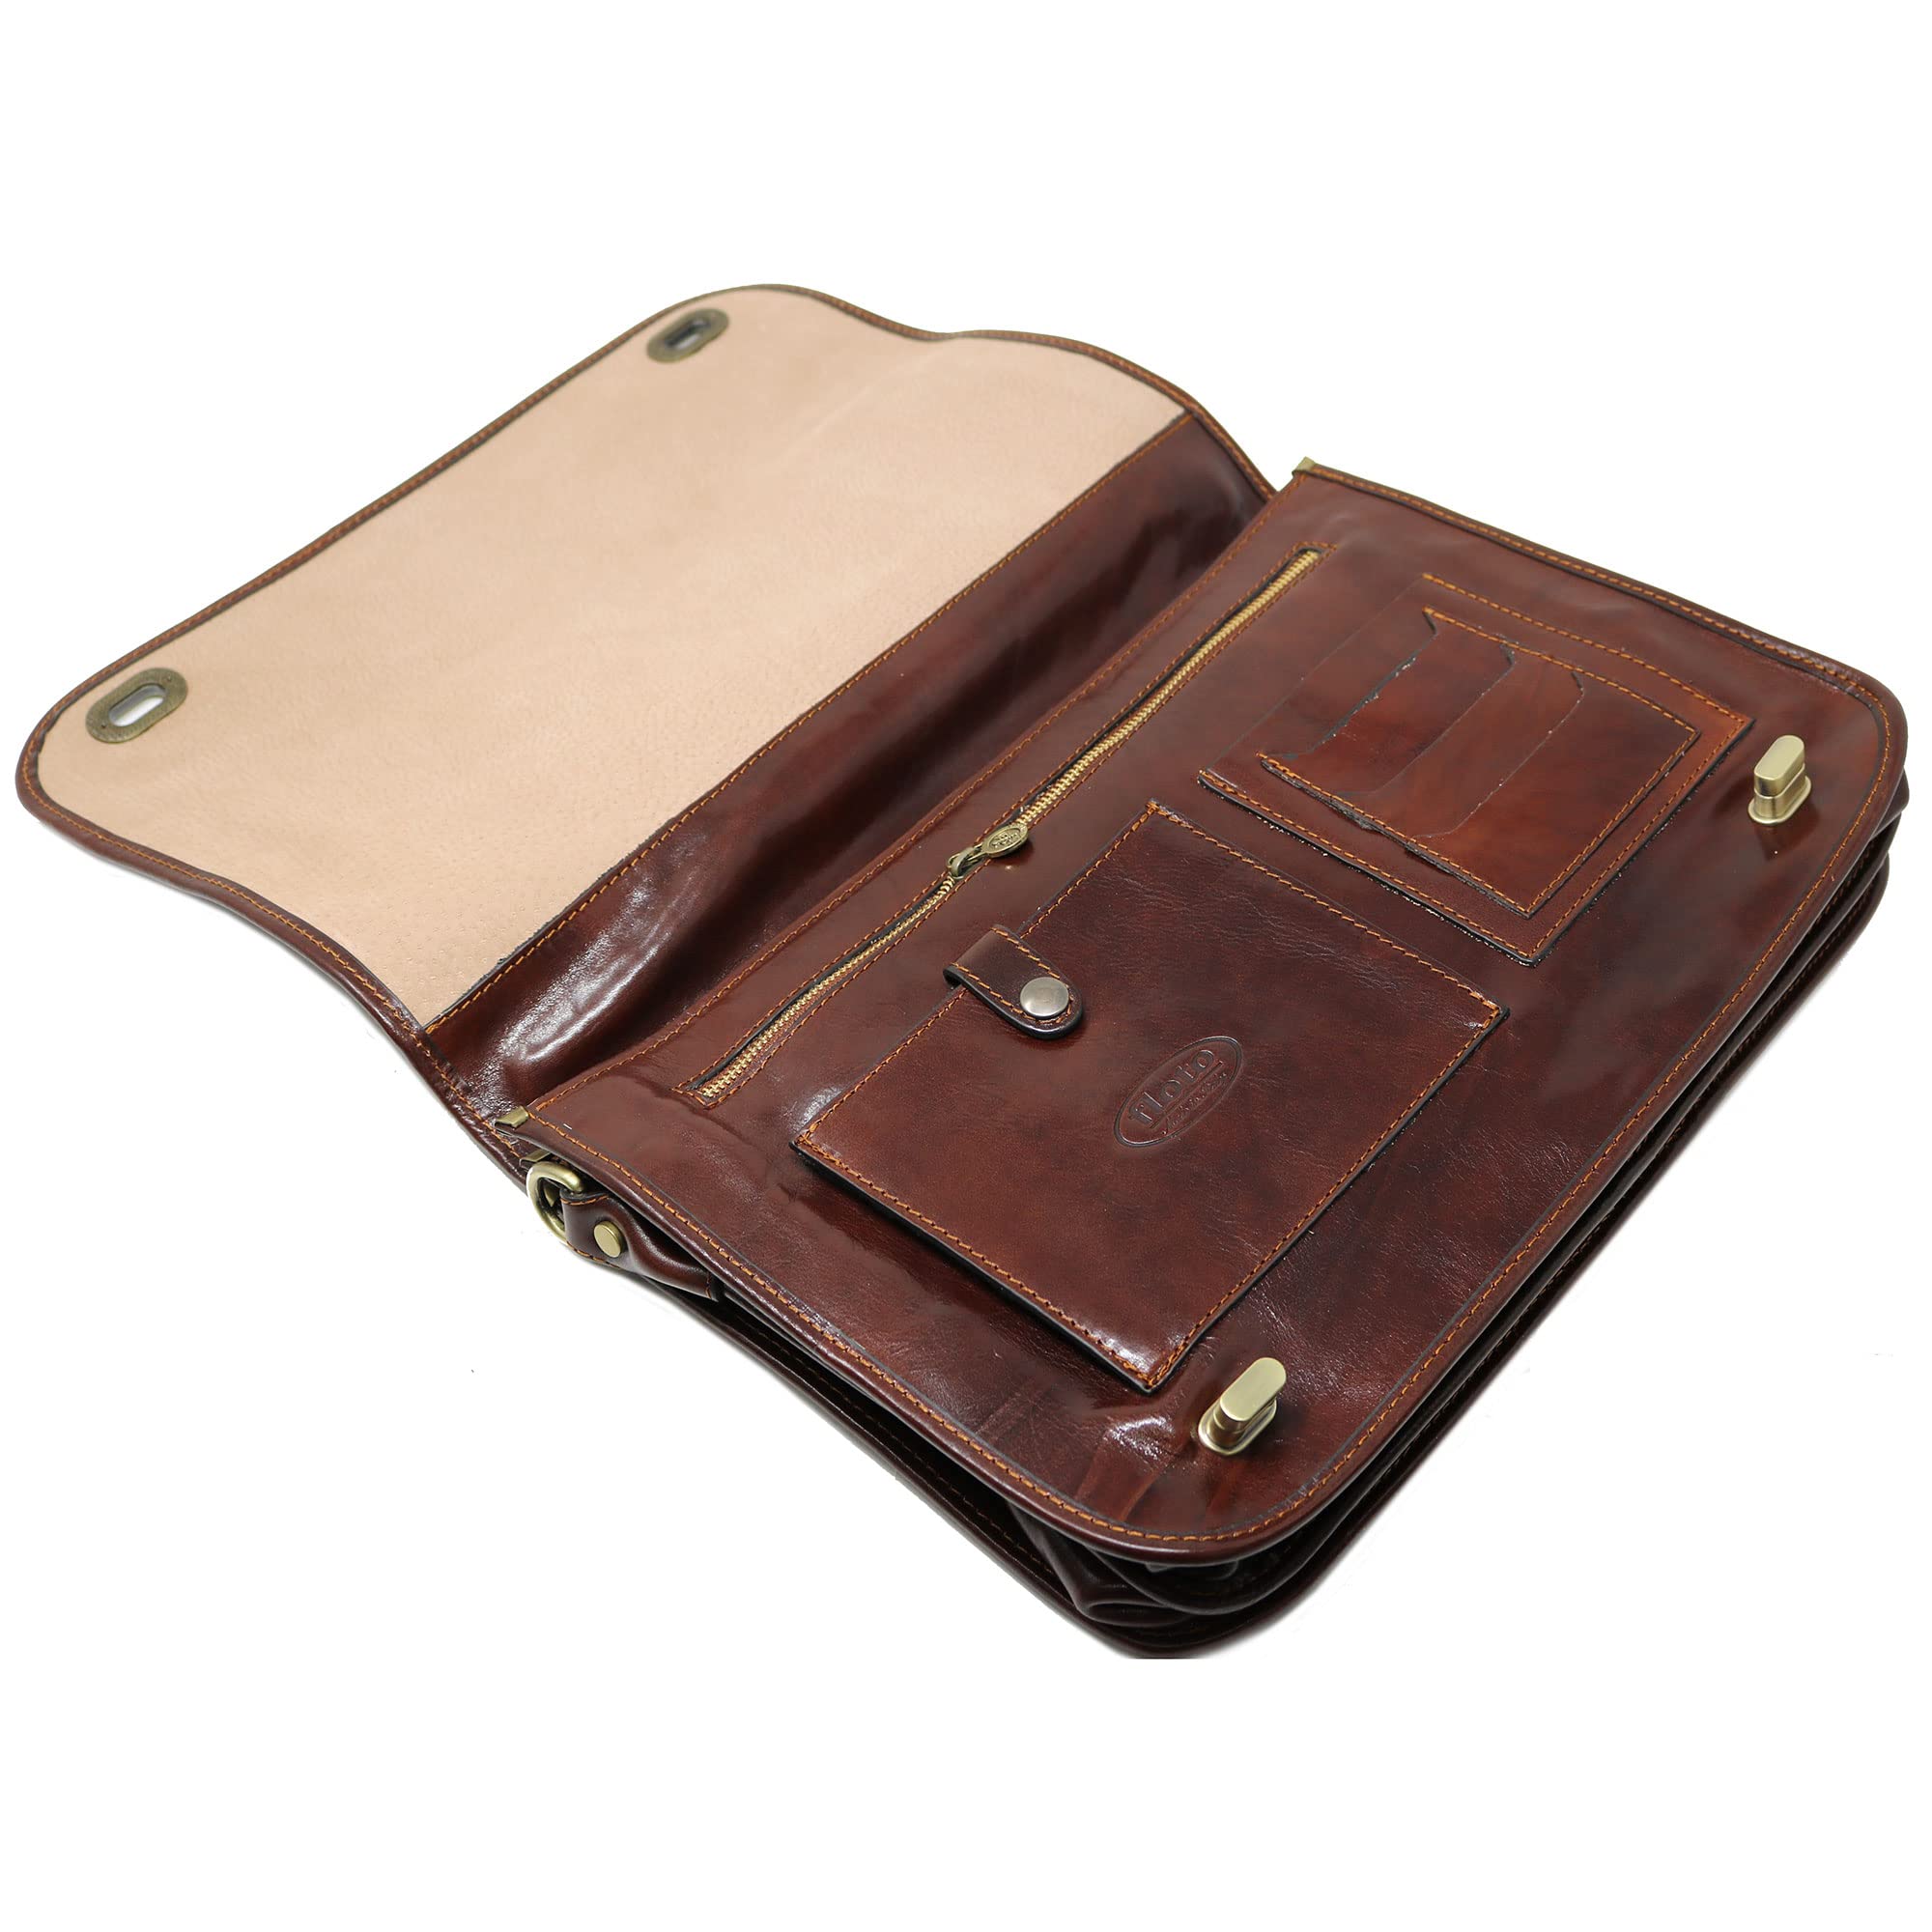 Floto Roma Leather Briefcase for Men Laptop Messenger Bag